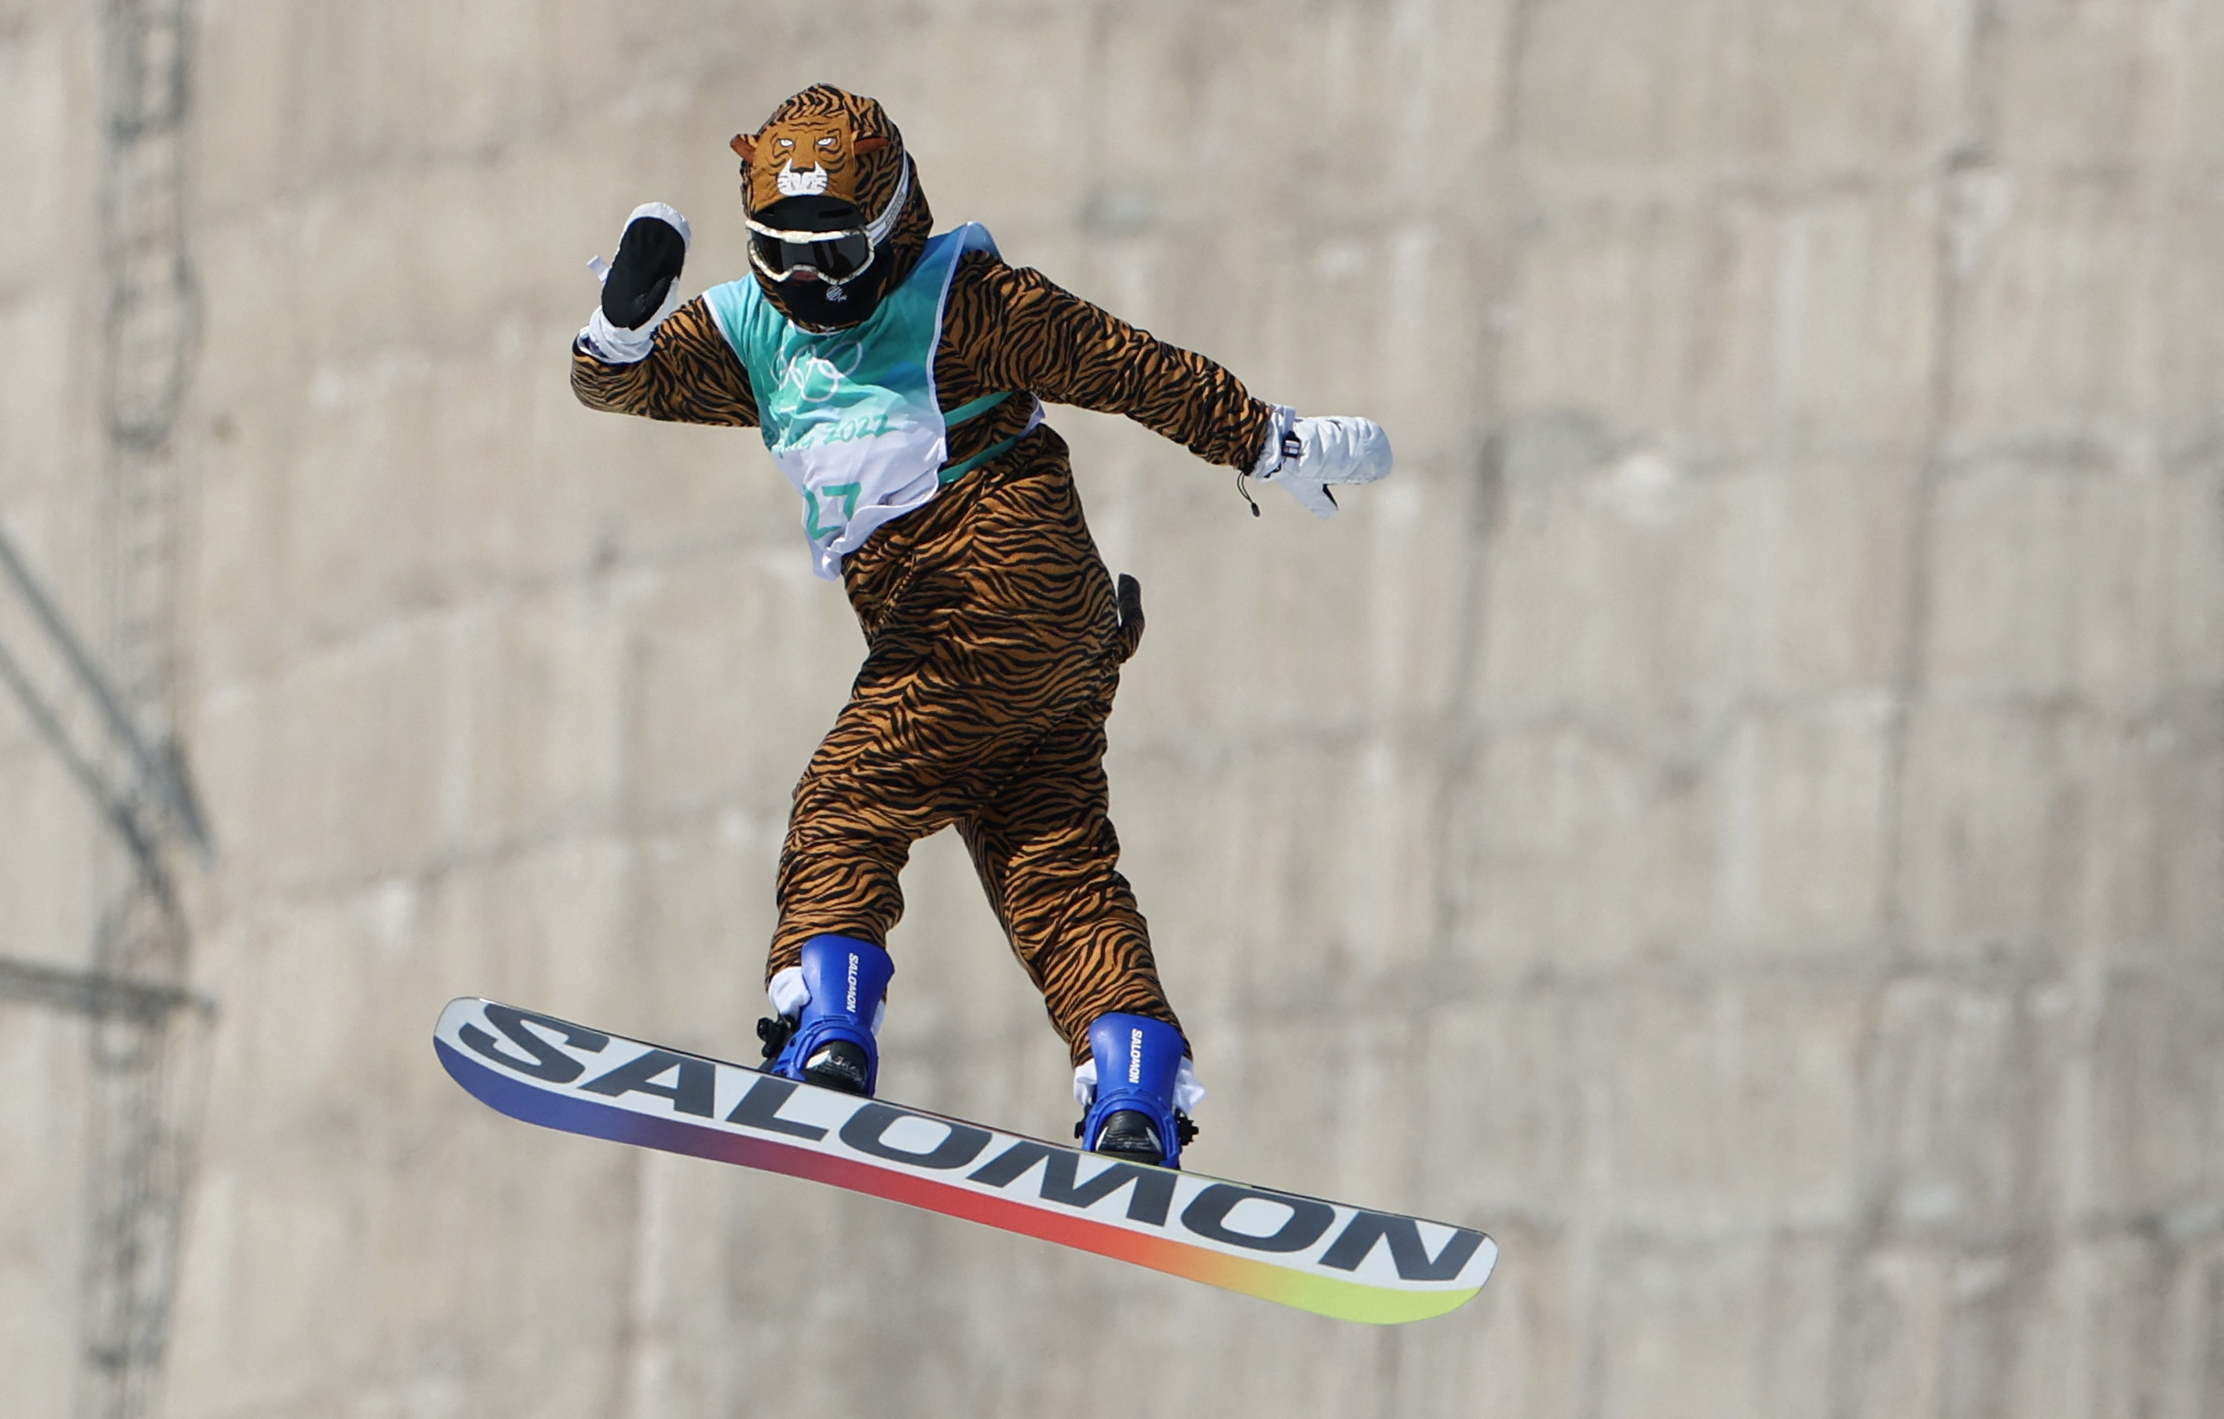 Snowboarding-Tiger Lefevre misses a trick in loving farewell | Reuters